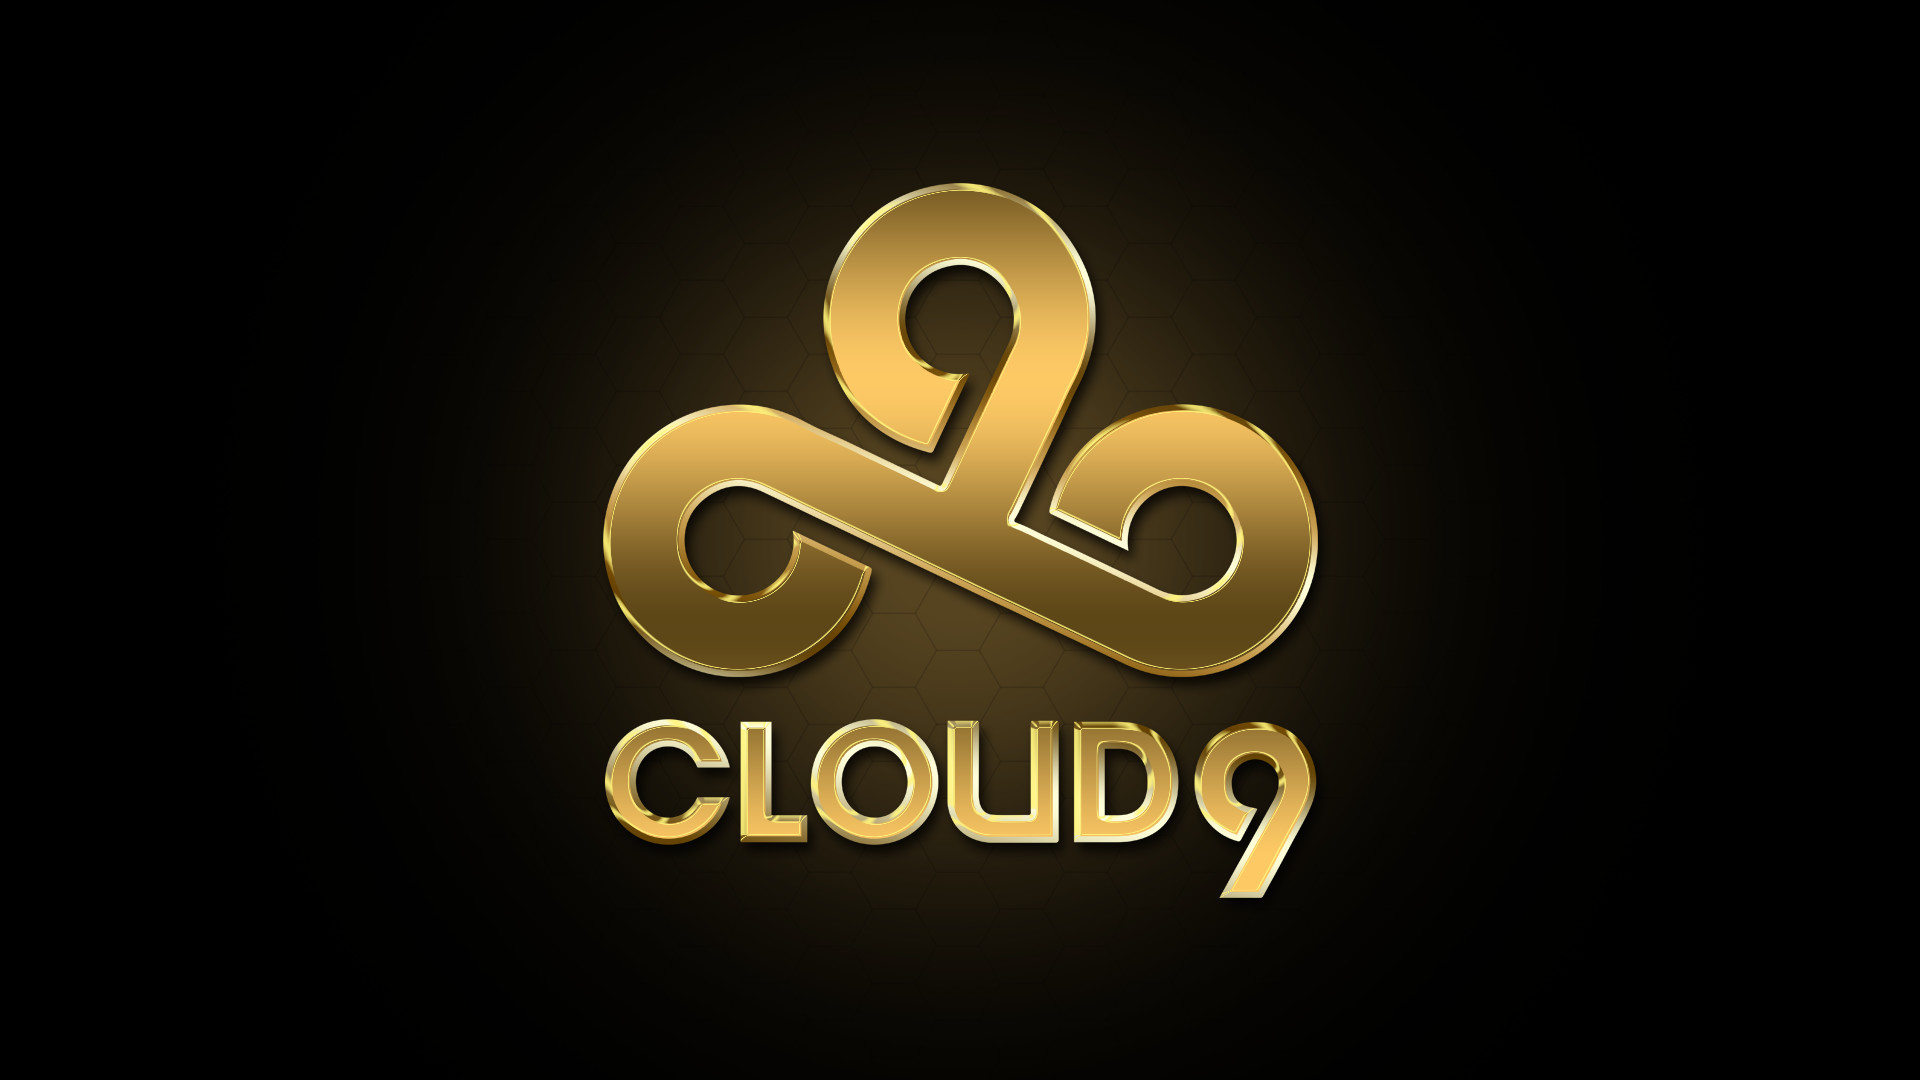 Cloud9 Gold